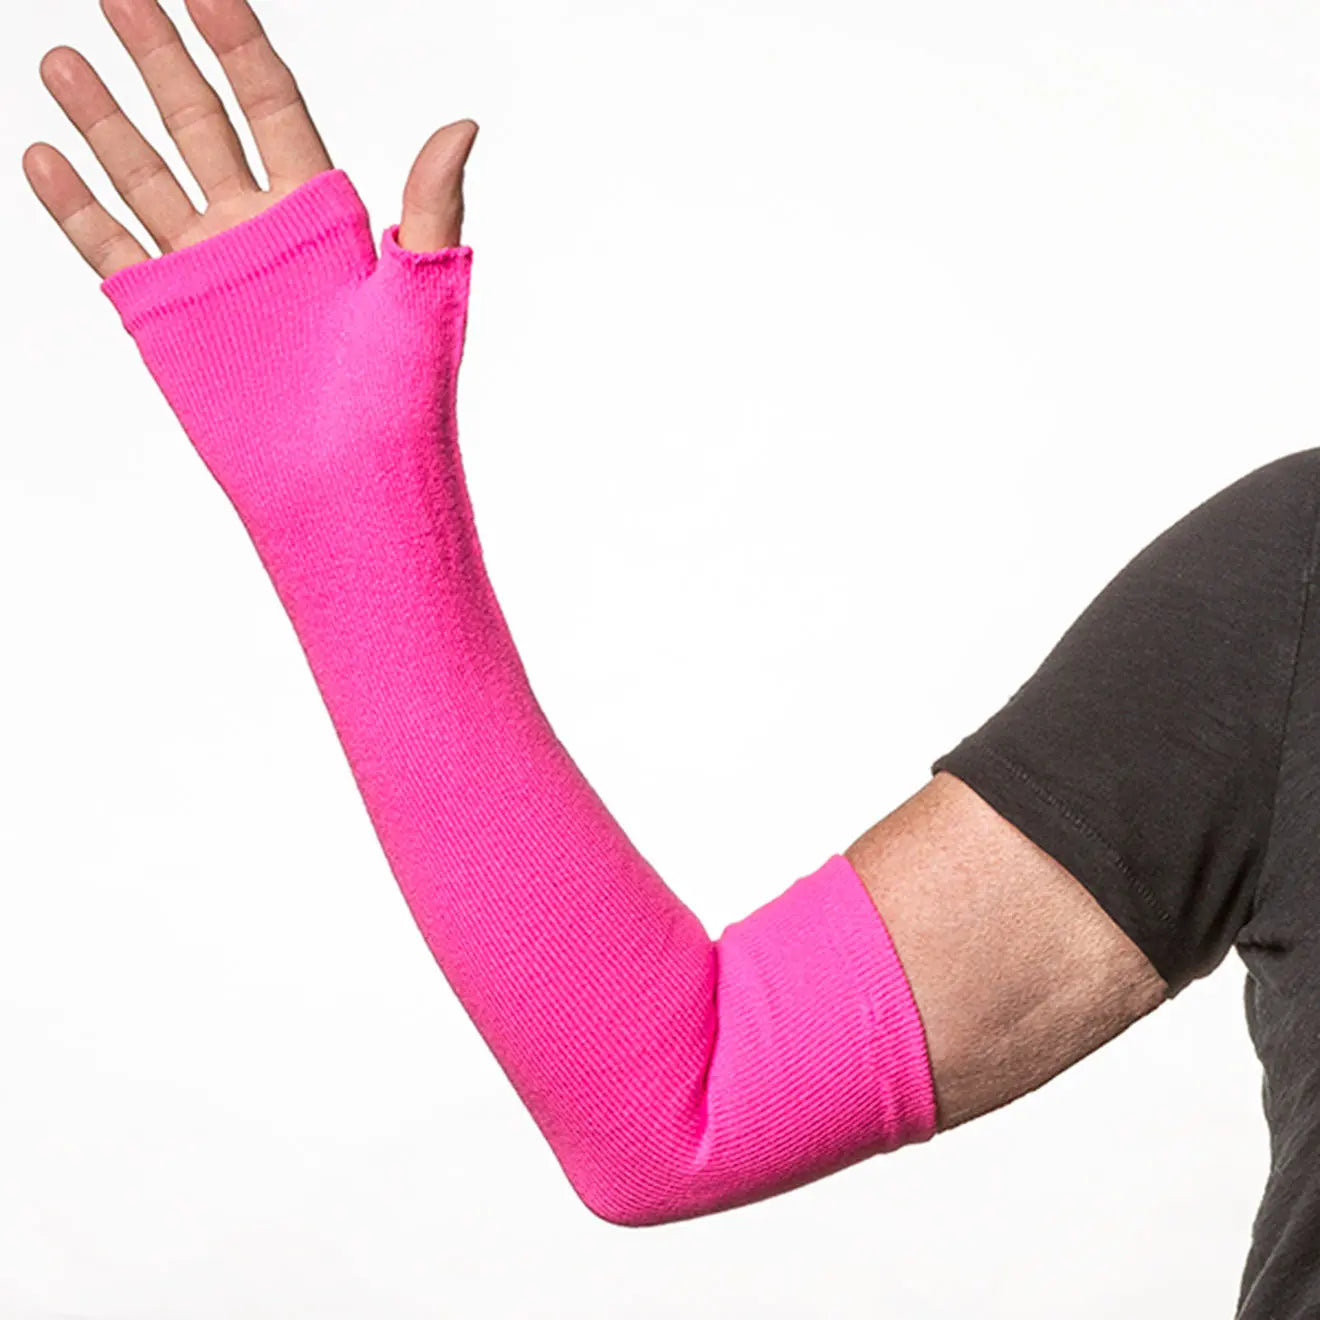 Long Fingerless Gloves - Weak thin skin protection (pair) Pink